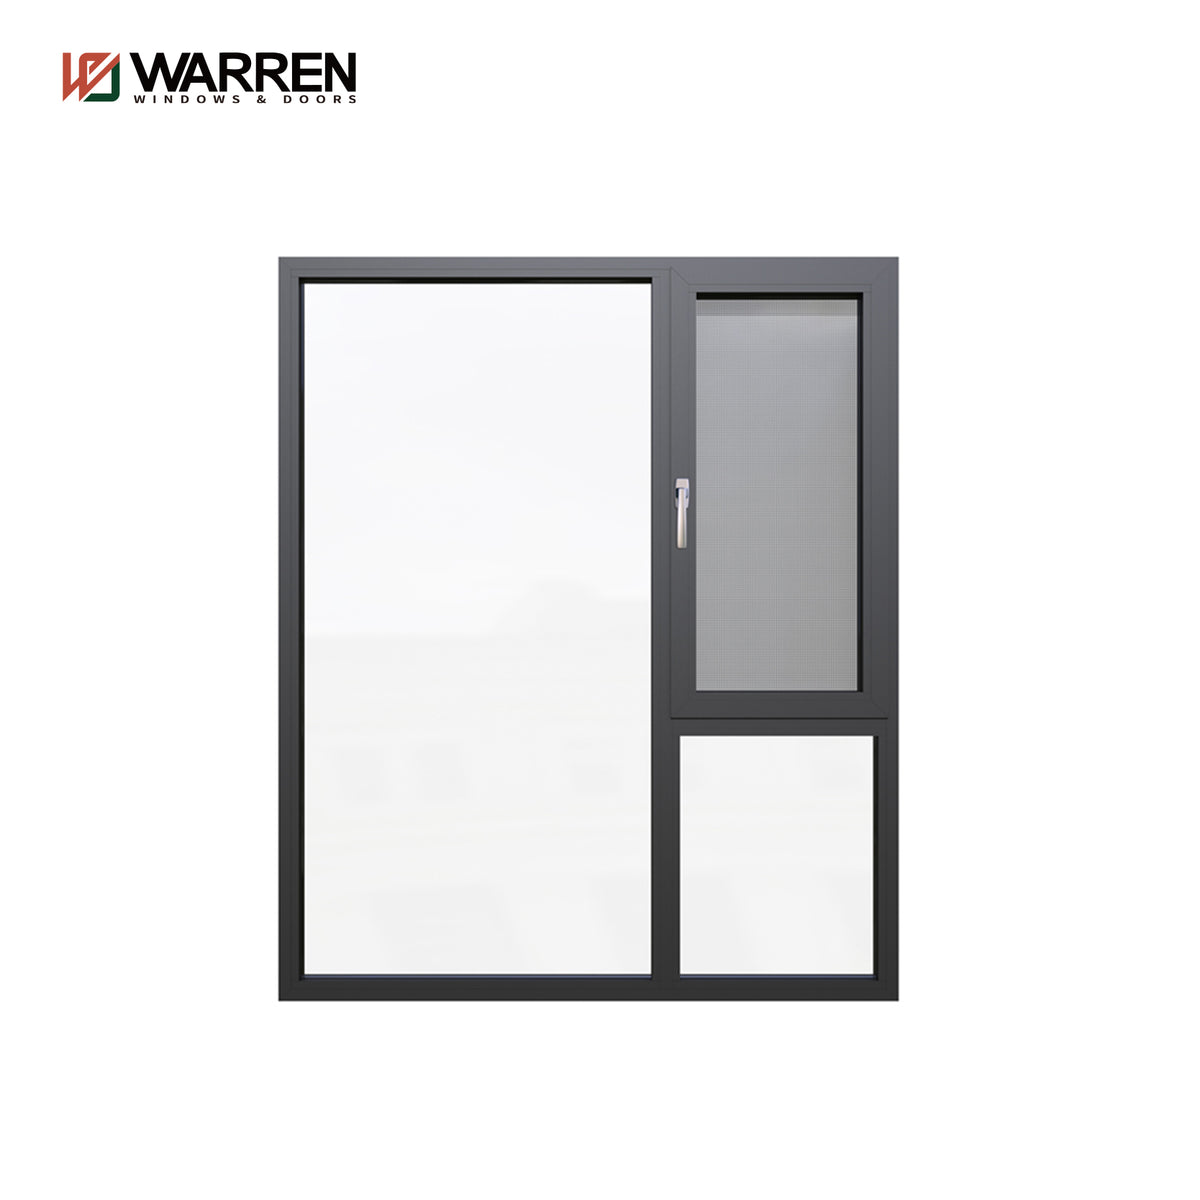 Factory Price Manufacturer Supplier Aluminum Outward Opening Casement Window Villa Door And Window System